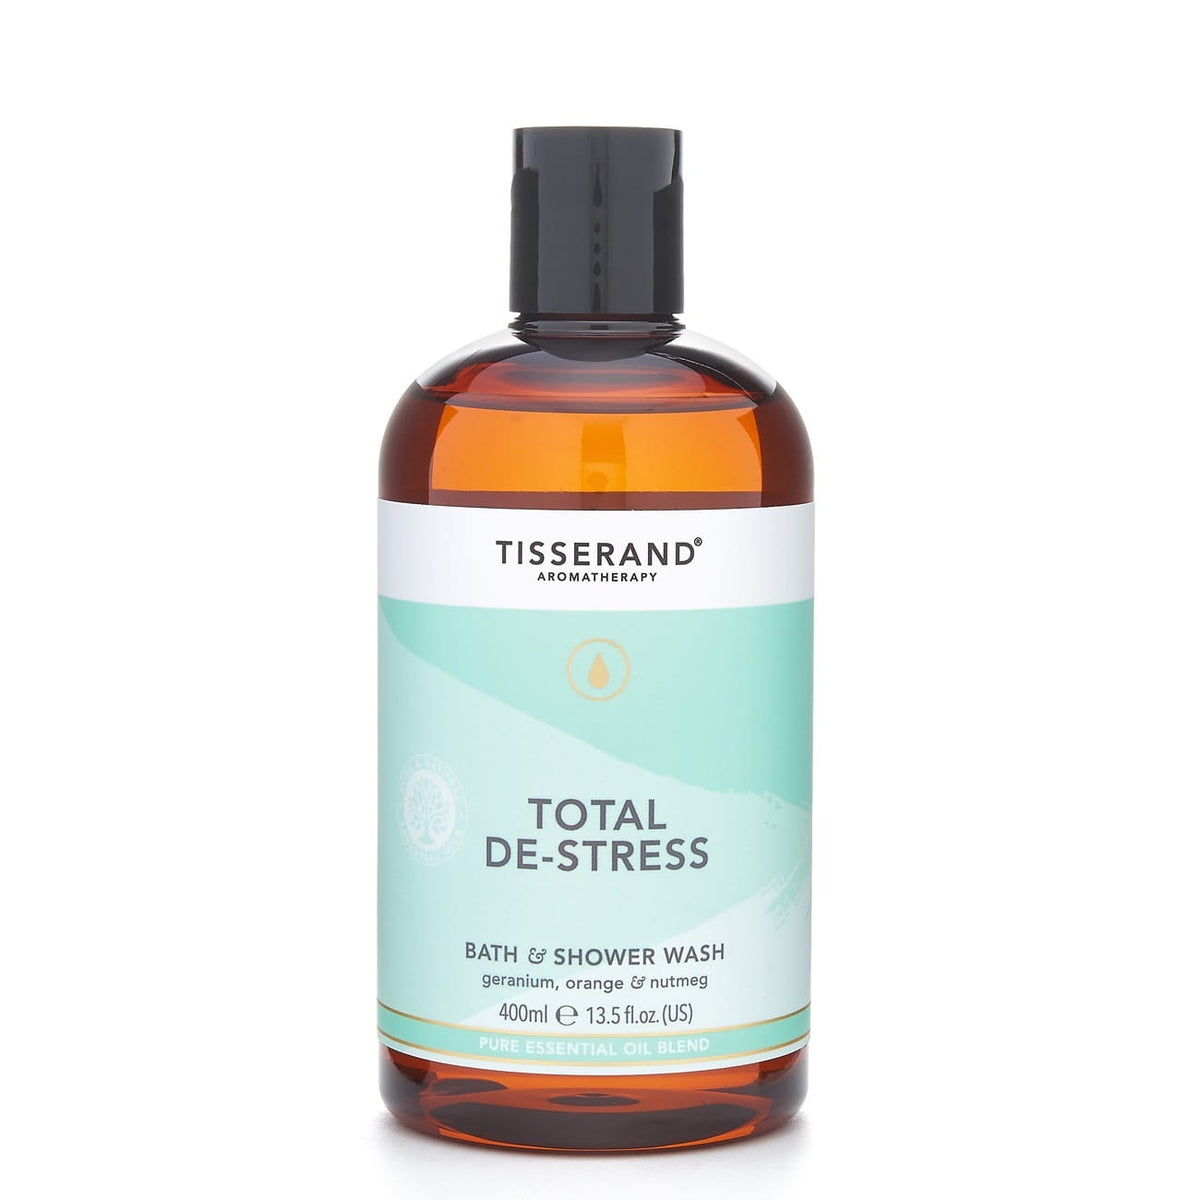 Total de - Stress Bath & Shower Wash 400 ml TISSERAND